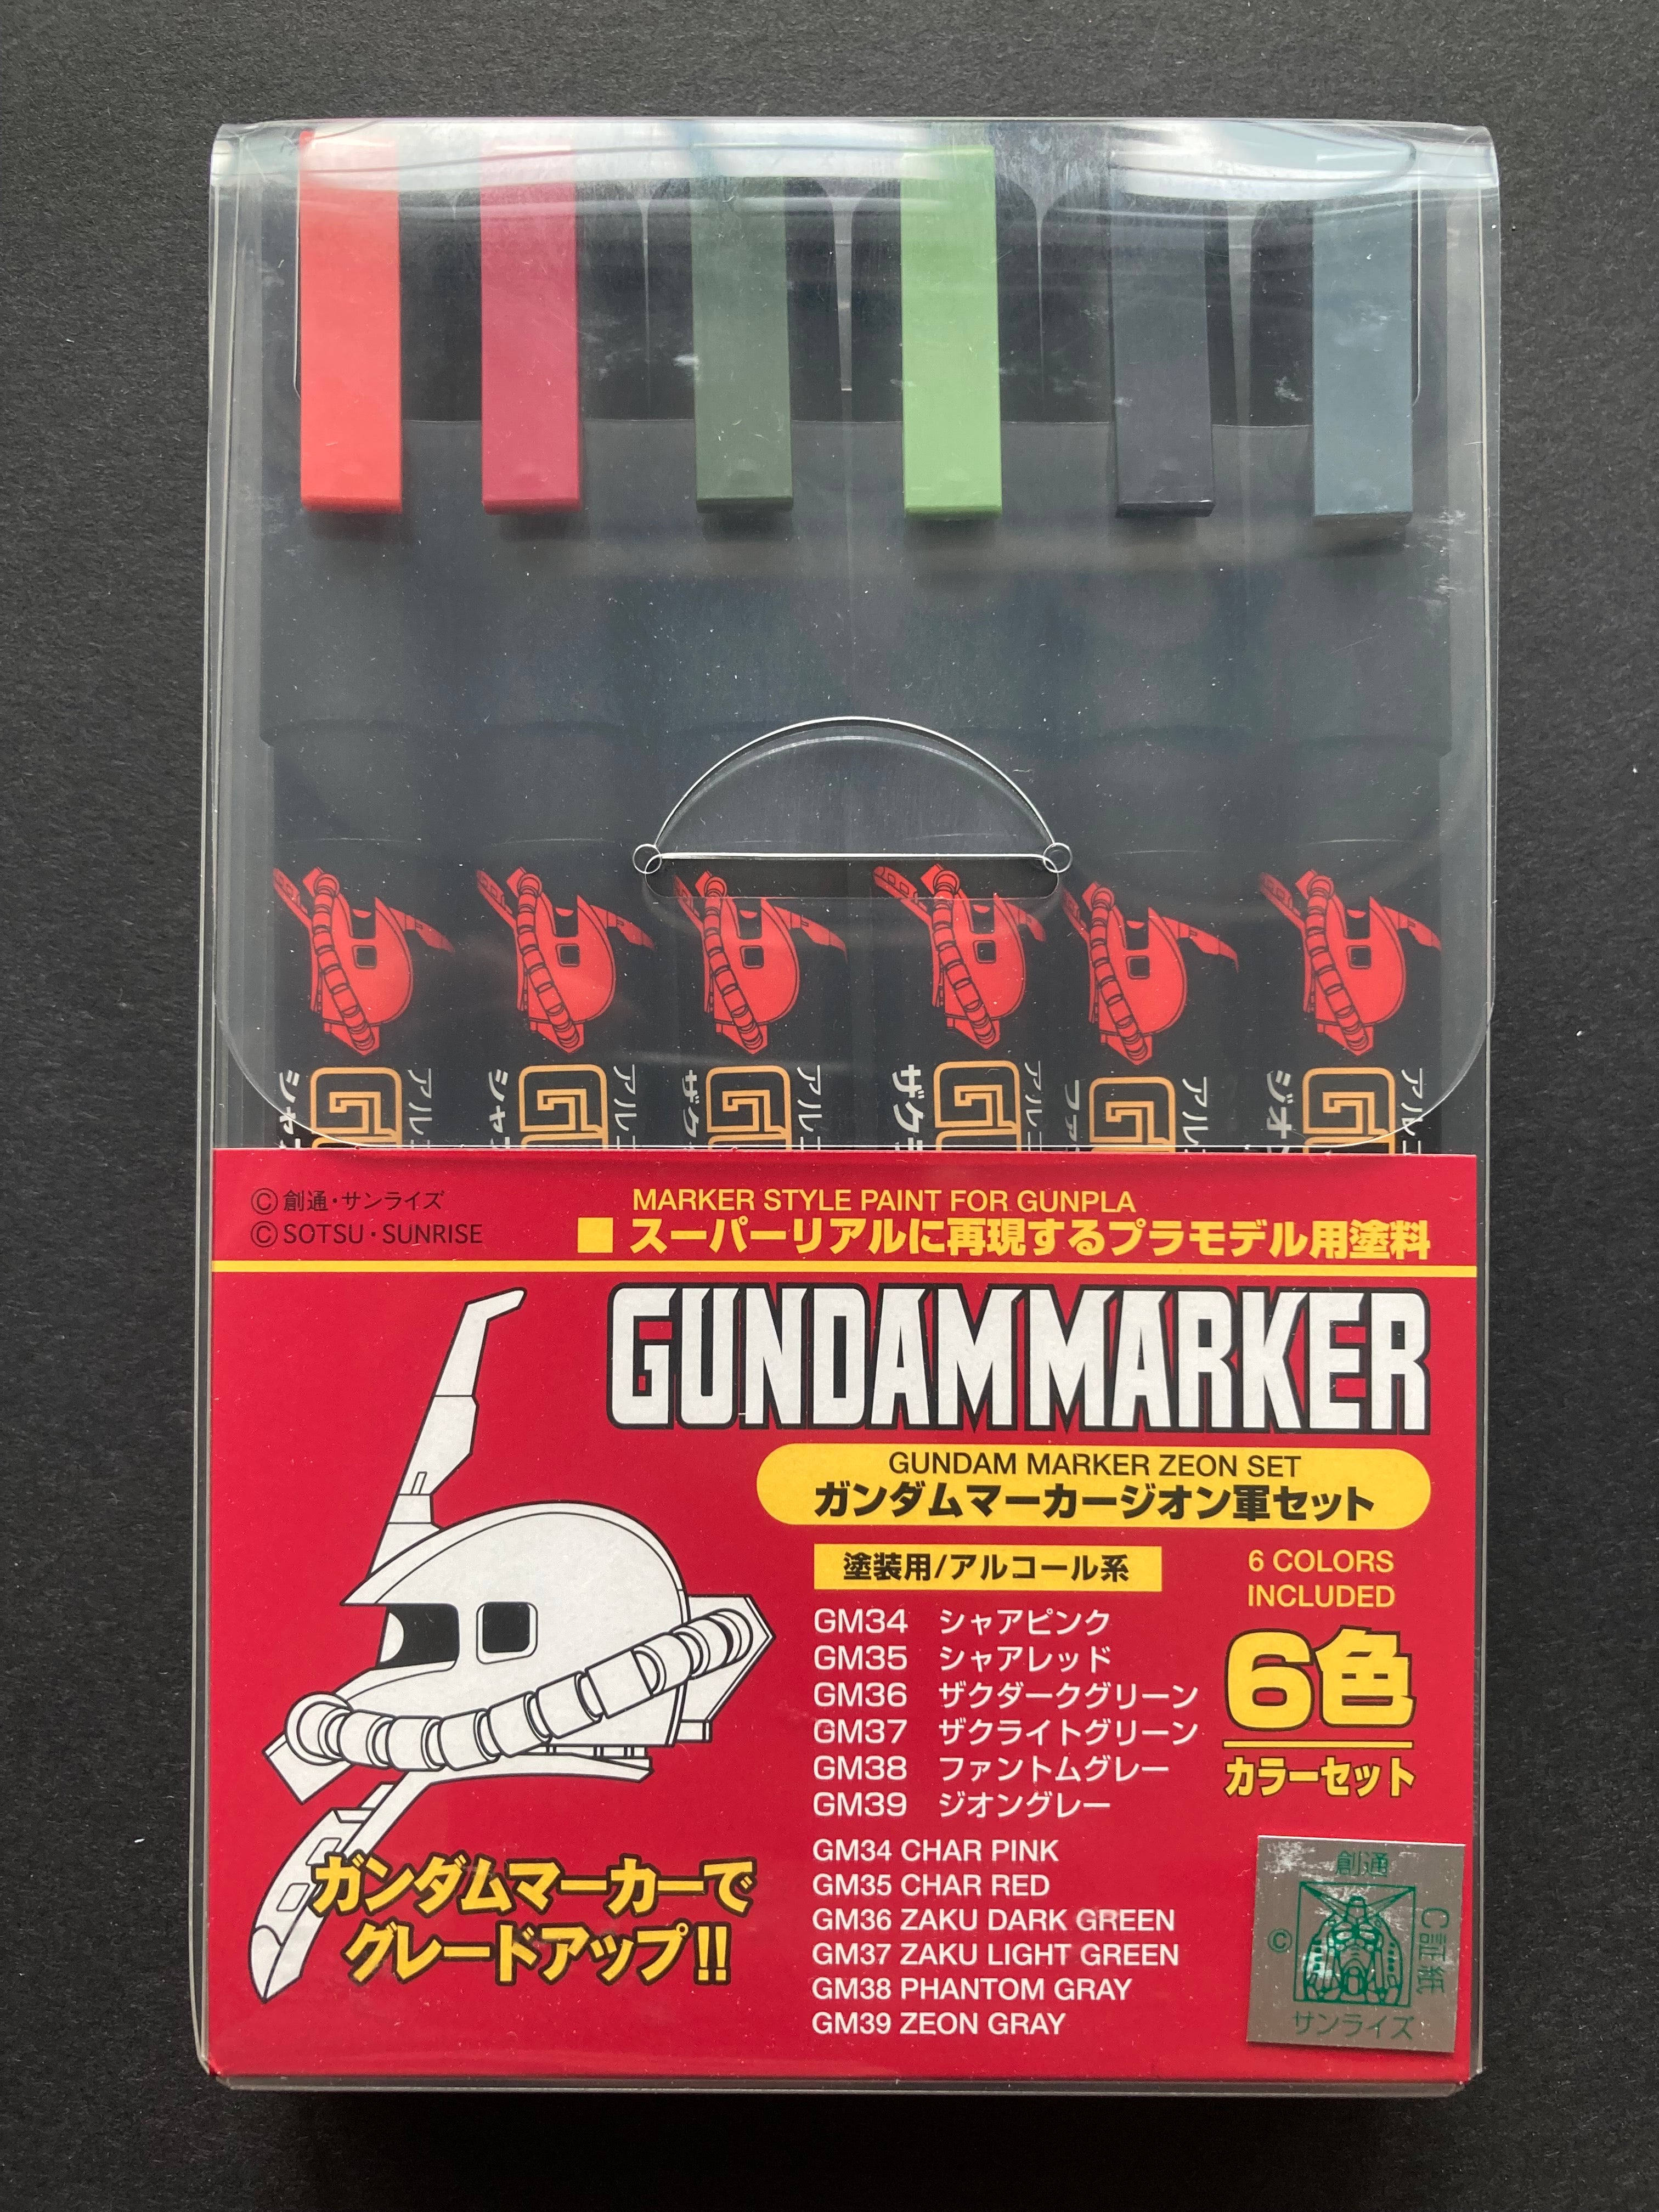 Review: Basic Gundam Marker Set 